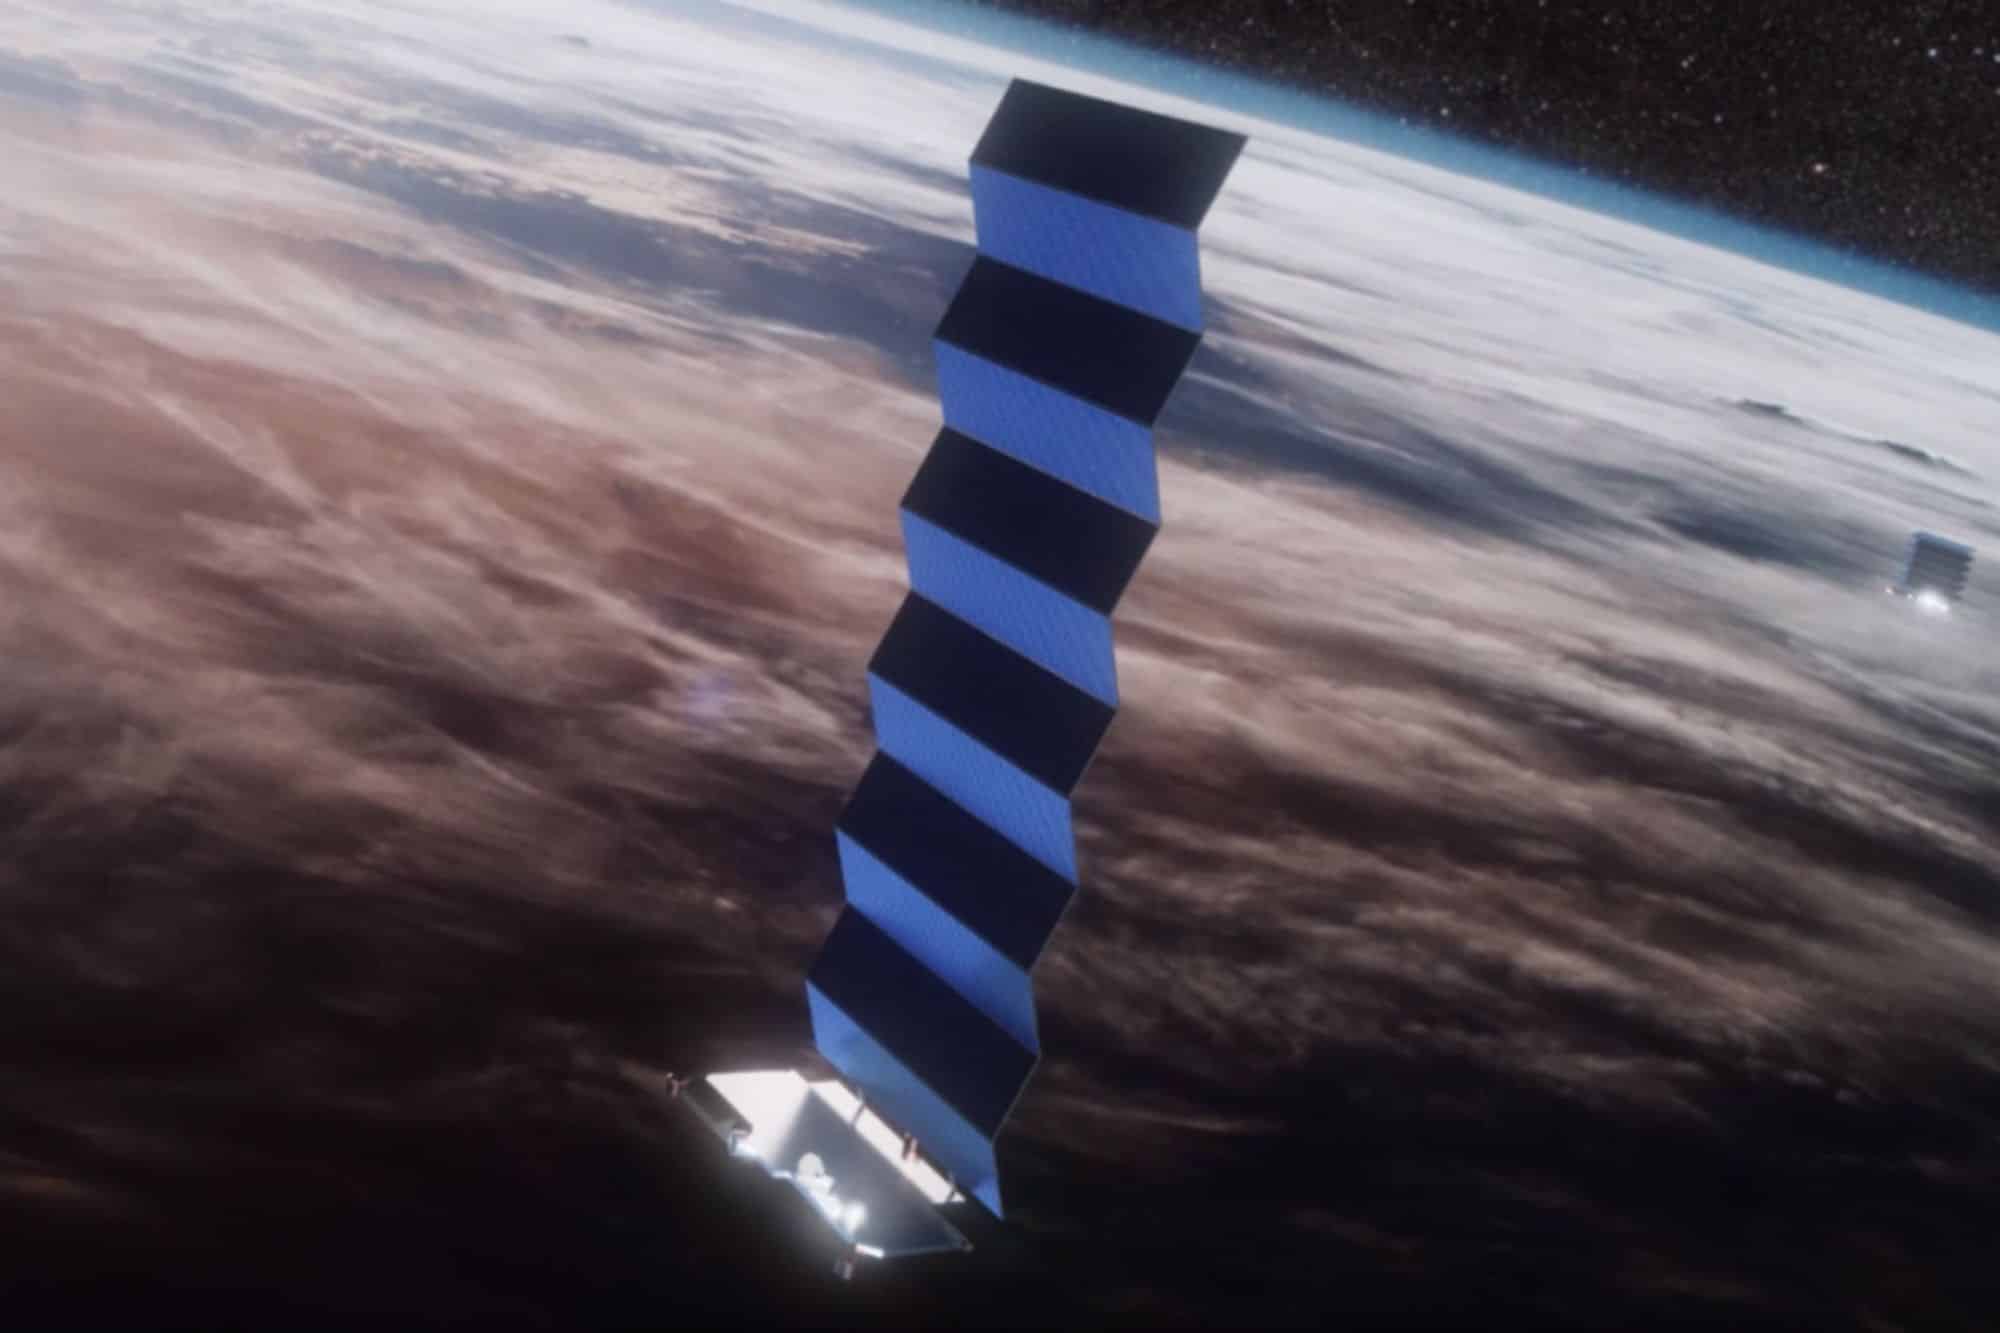 spacex satellite internet plans for launch in mi 2020 aux etats unis